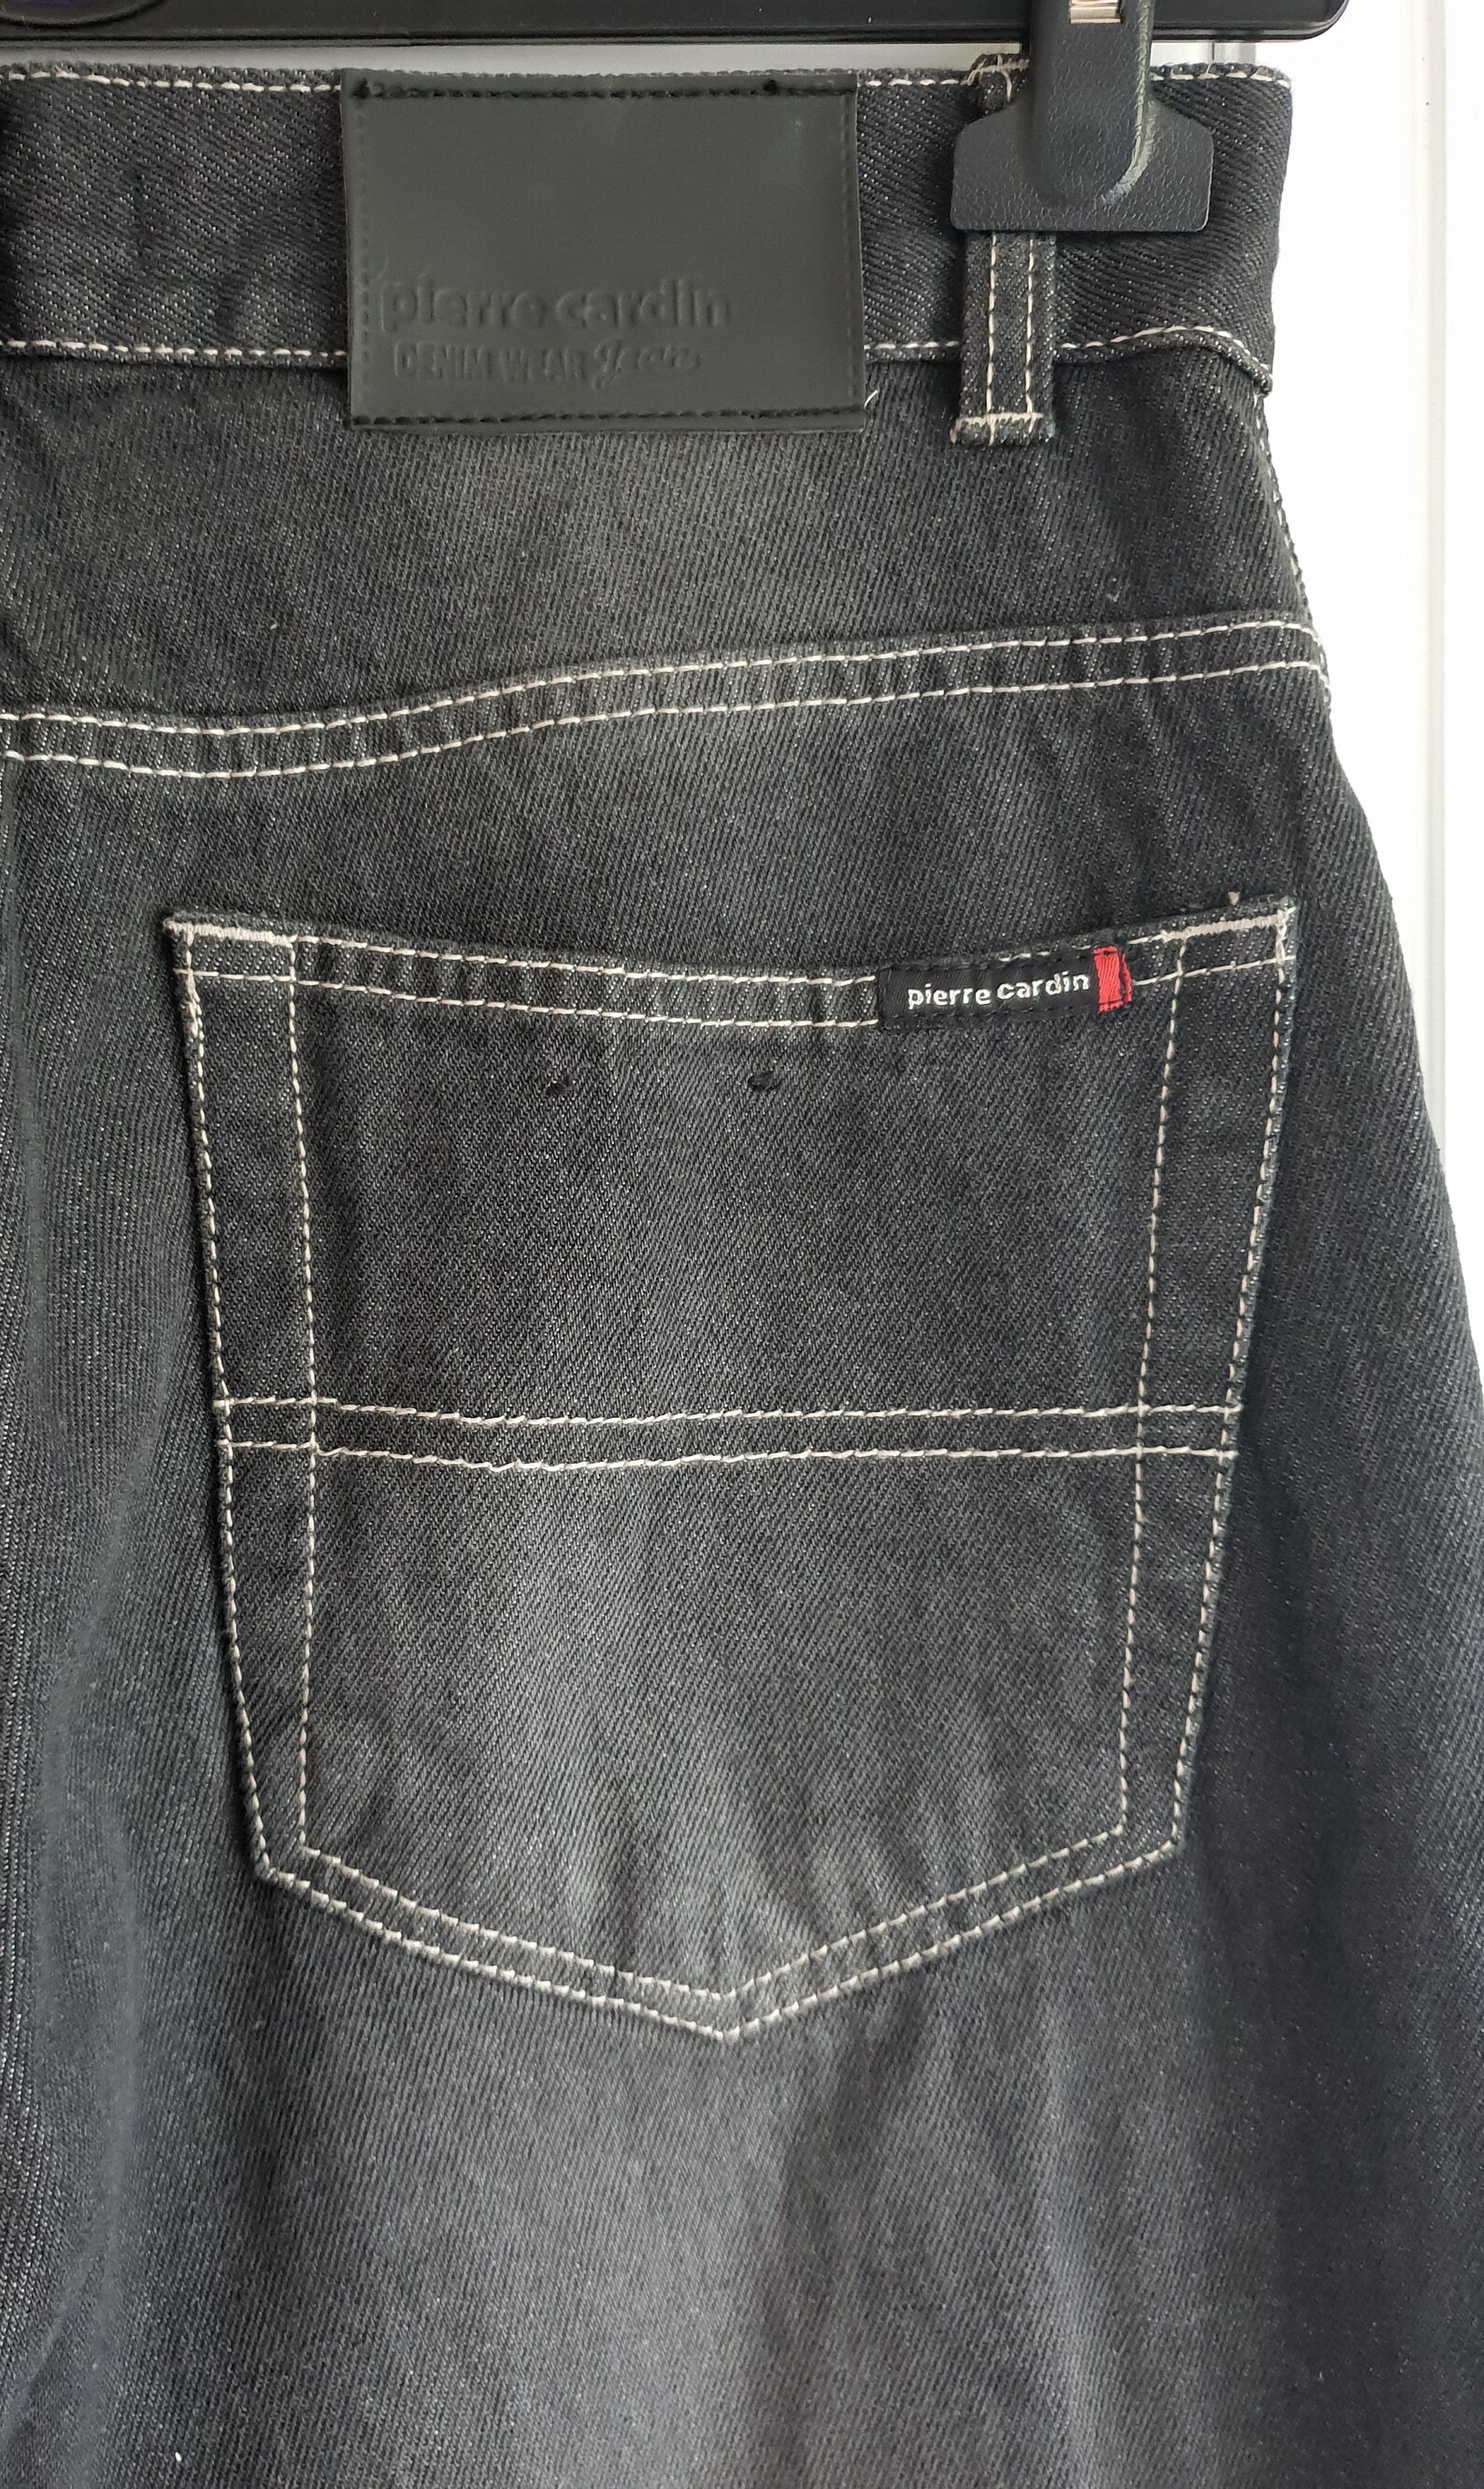 Vintage Jeans Pierre Cardin Black Denim Jeans Pants Men Women | Etsy